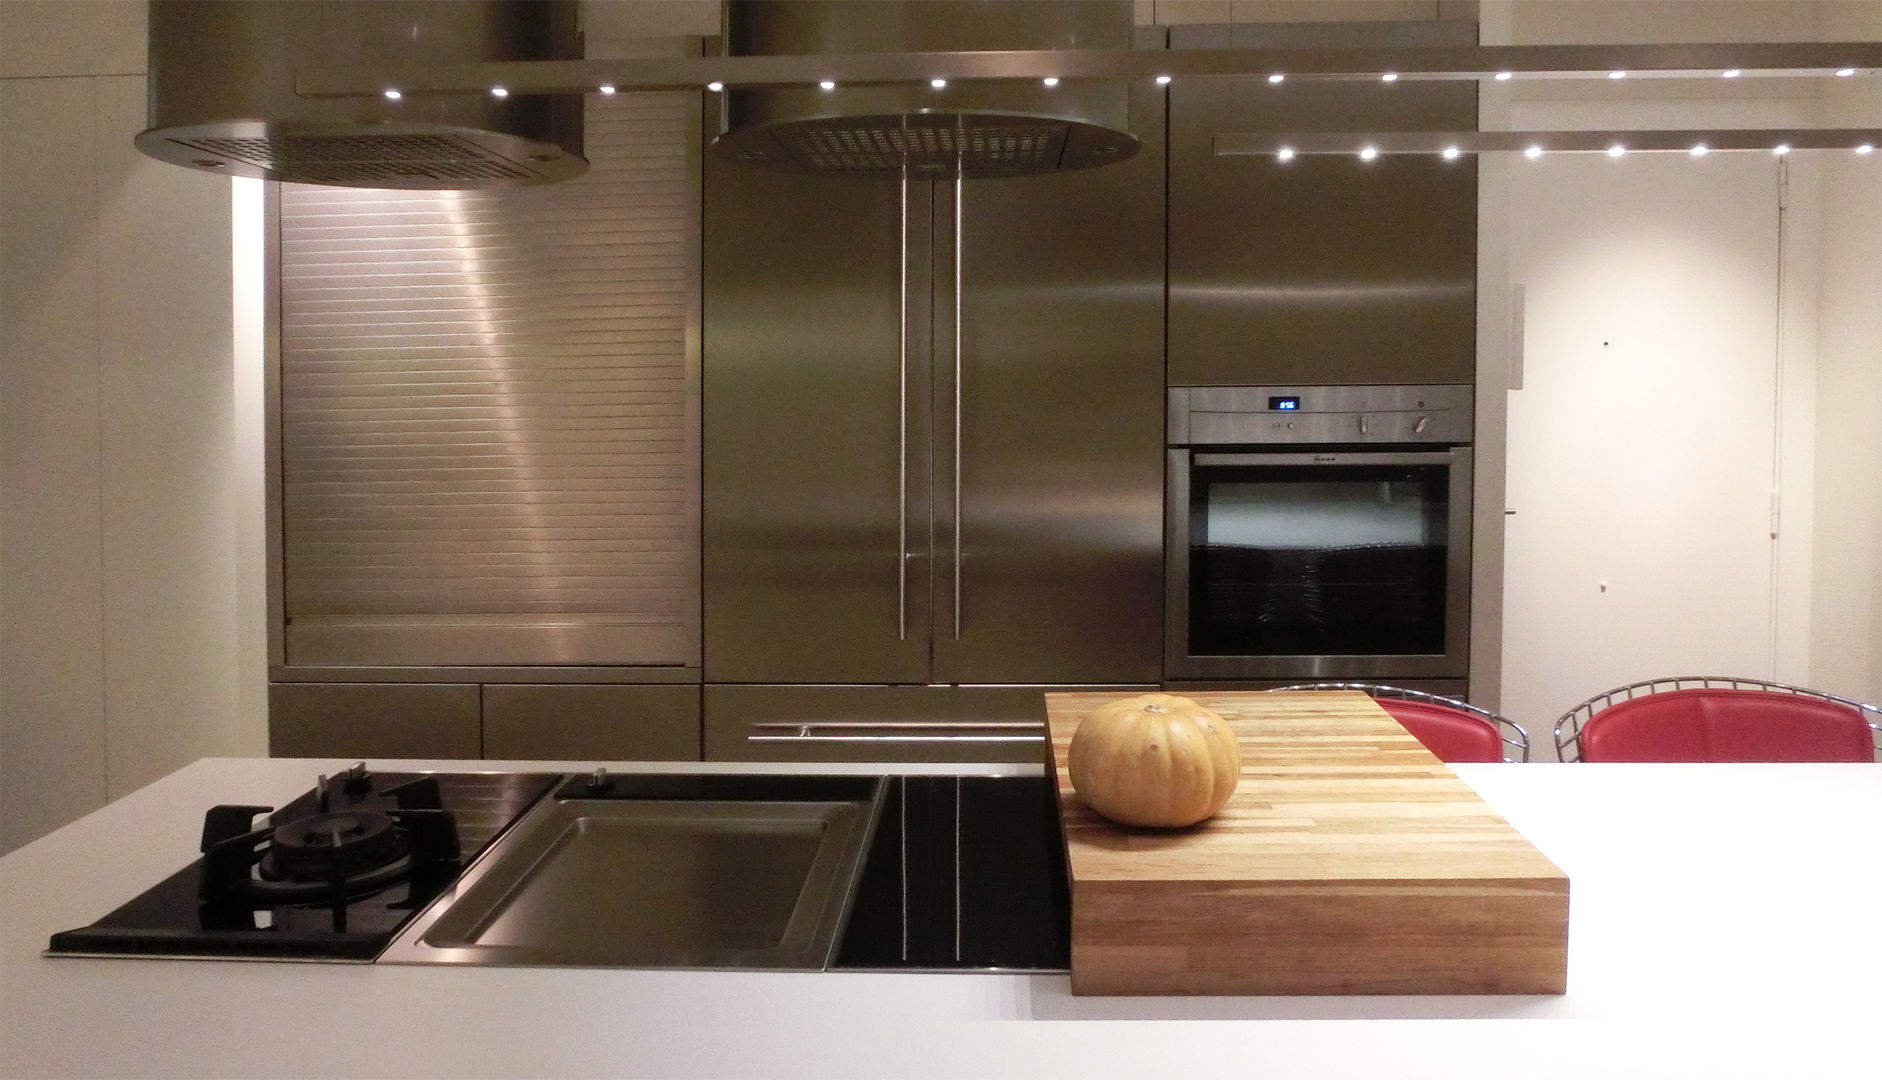 Detail of triple cooking unit. Daifuku Designs Dapur Minimalis kitchen cabinet,kitchen island